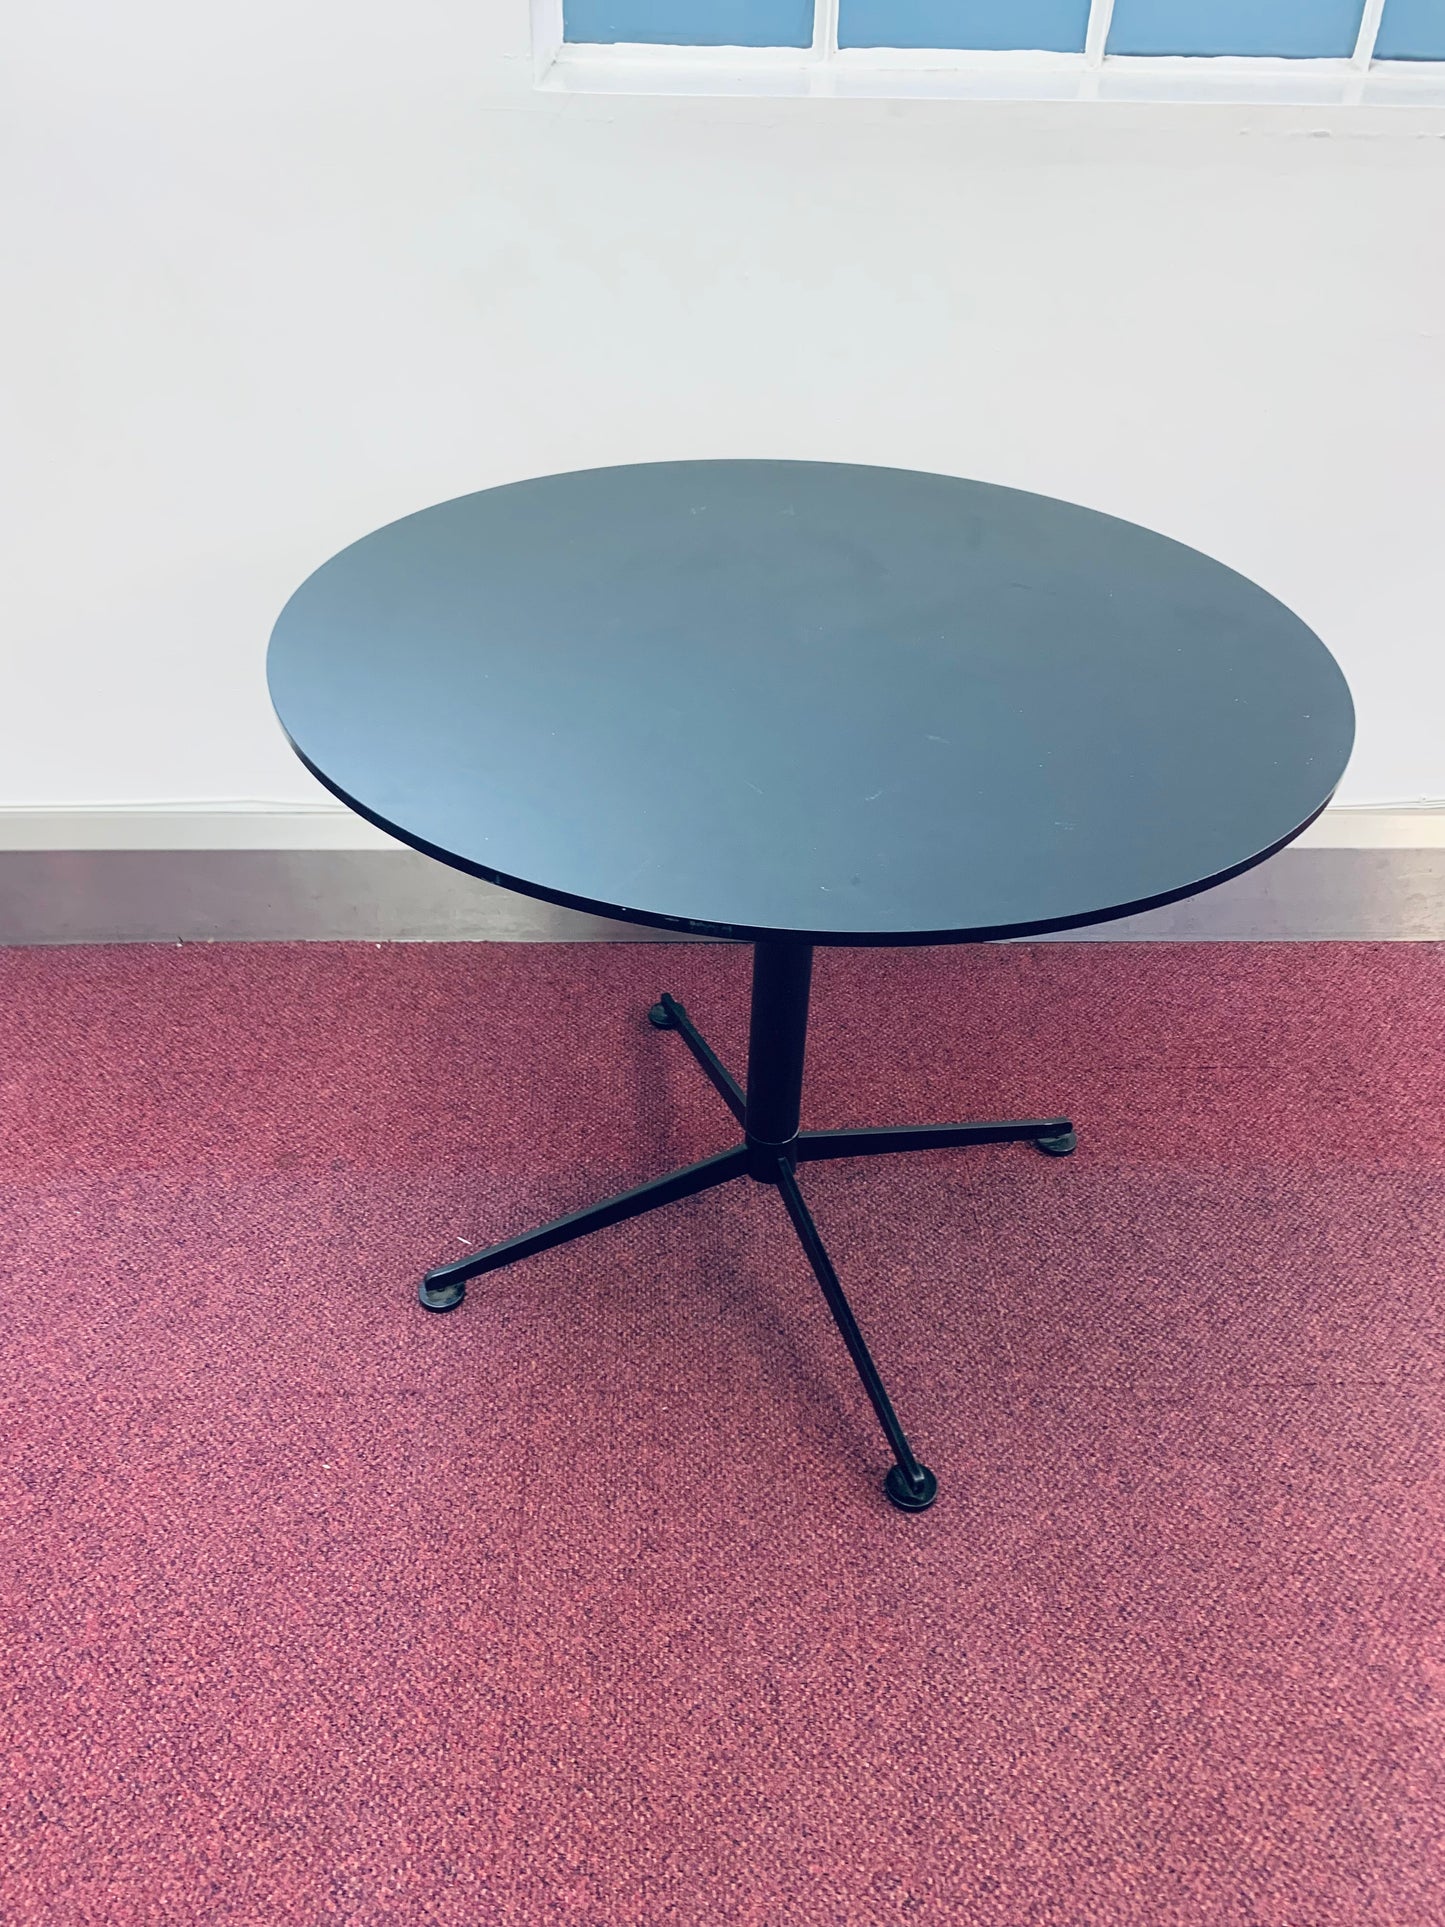 Black Paustian Office Circle Table on carpet